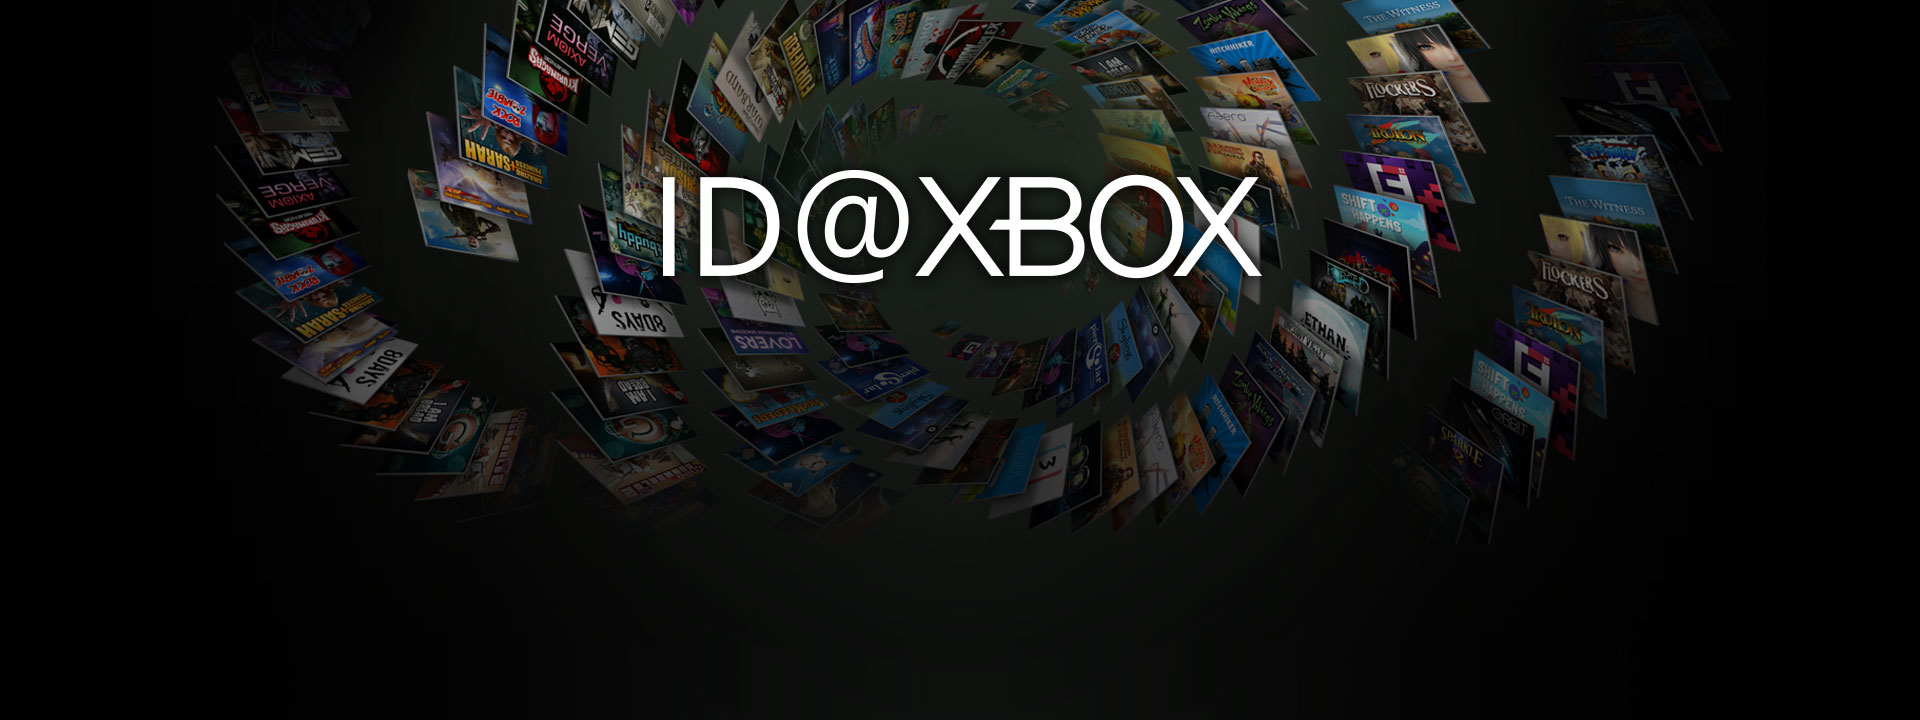 ID oyunlarının kutu resimlerinin önünde ID at Xbox logosu